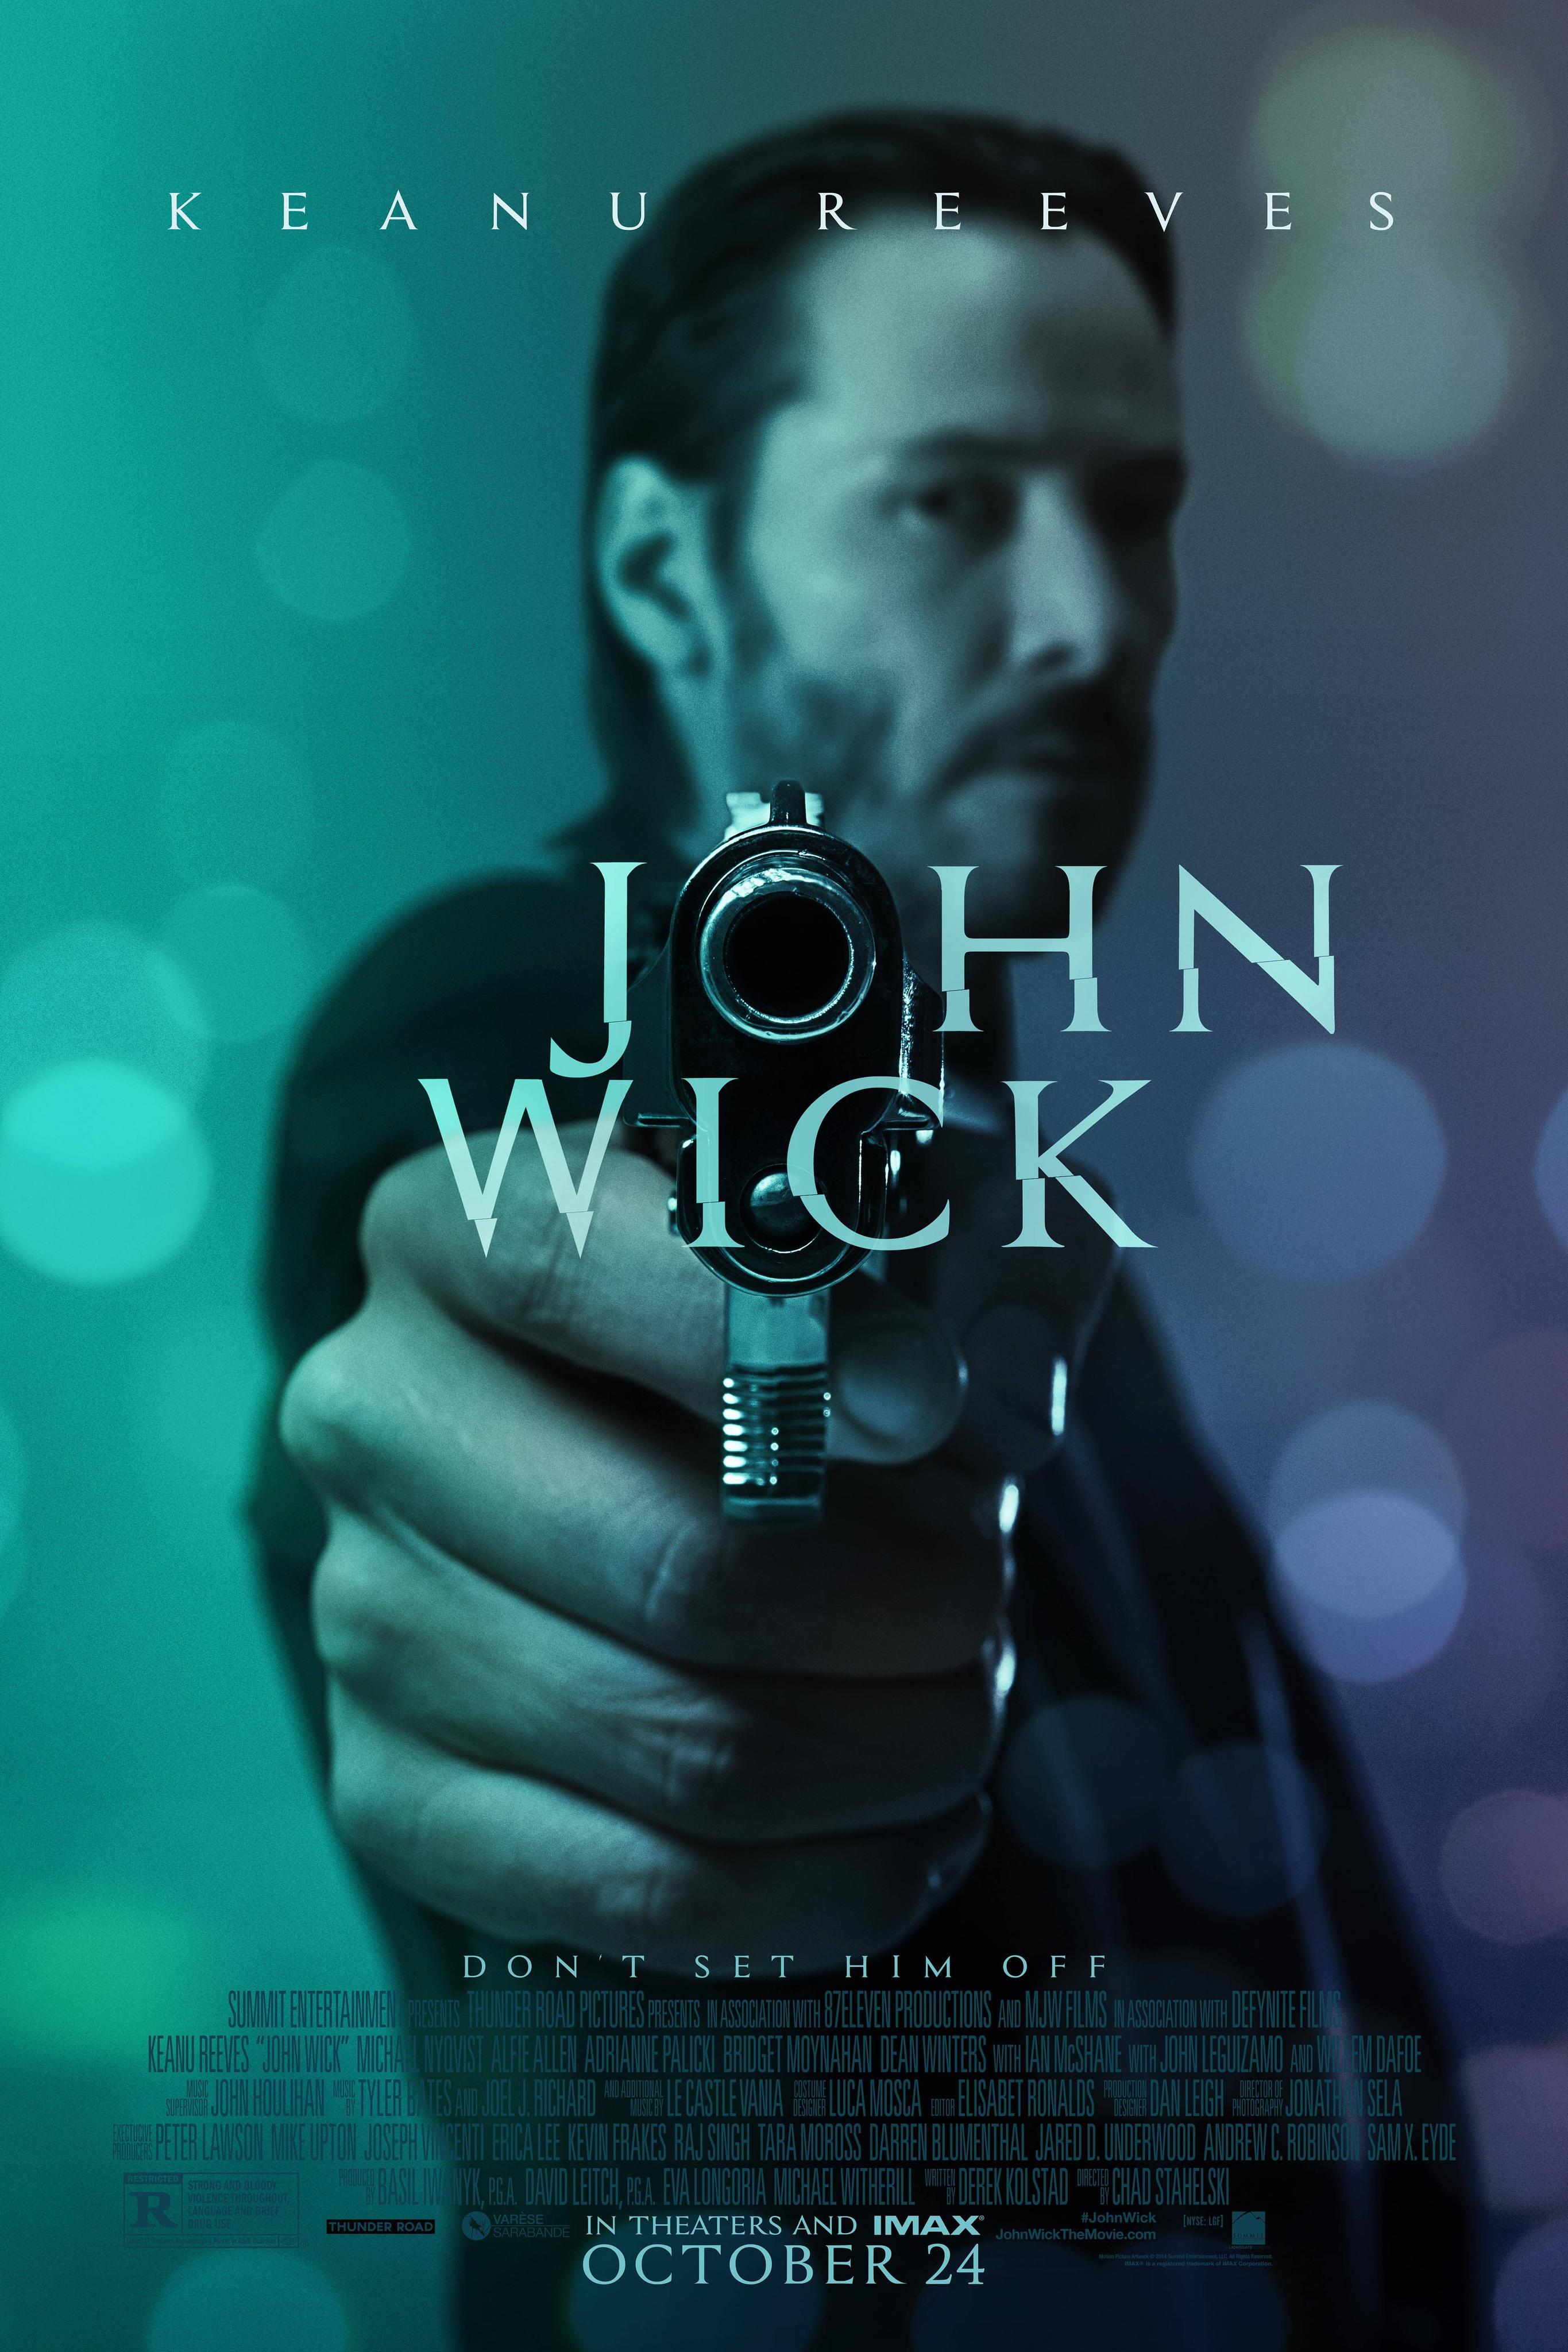 RESUMO DOS FILMES: John Wick está de volta e o bicho vai pegar